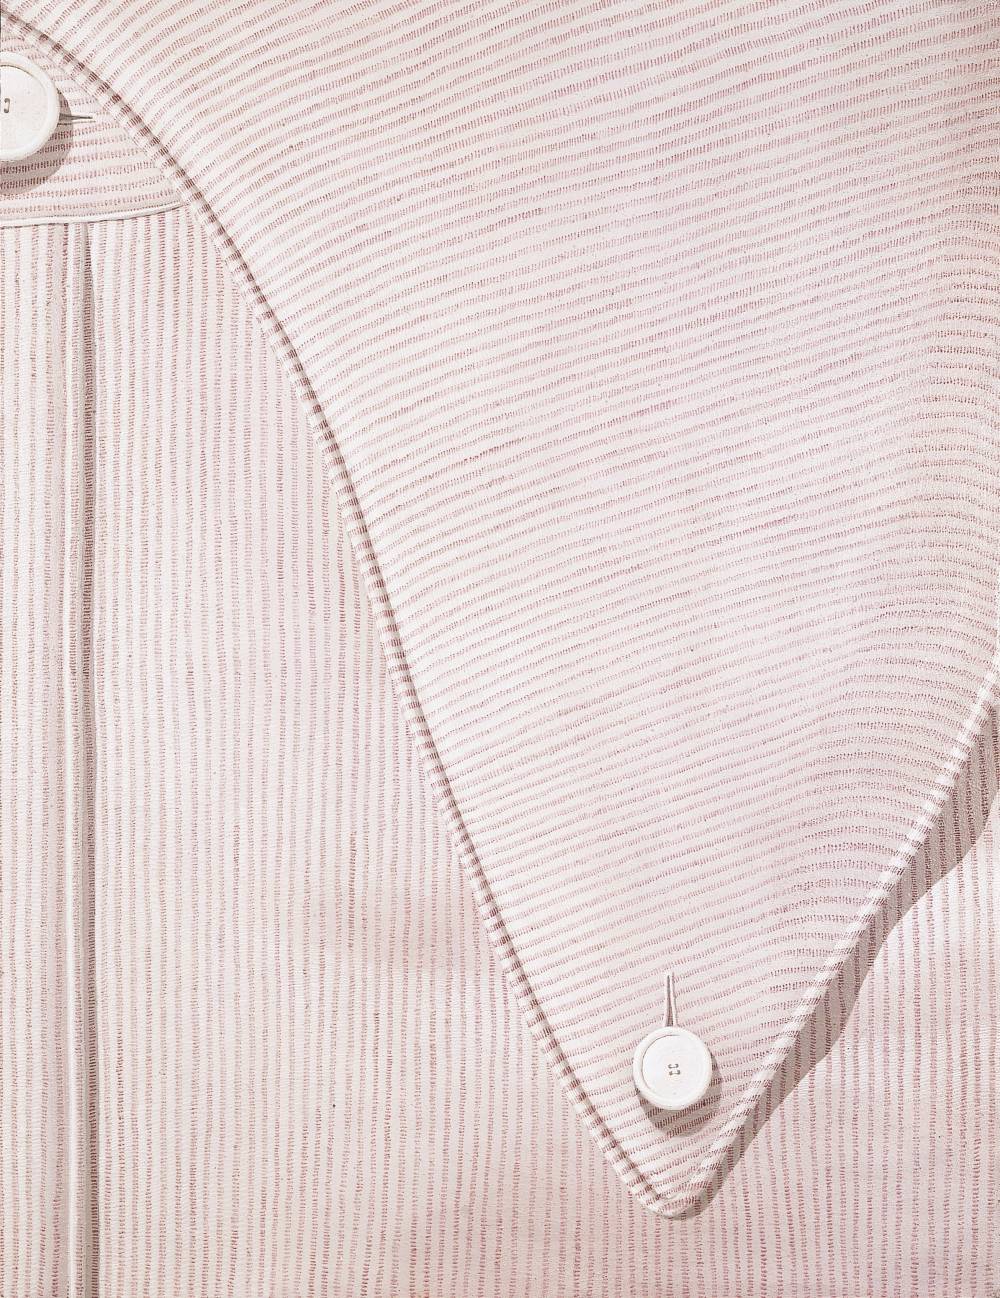 Domenico gnoli  striped shirt lapel  1969